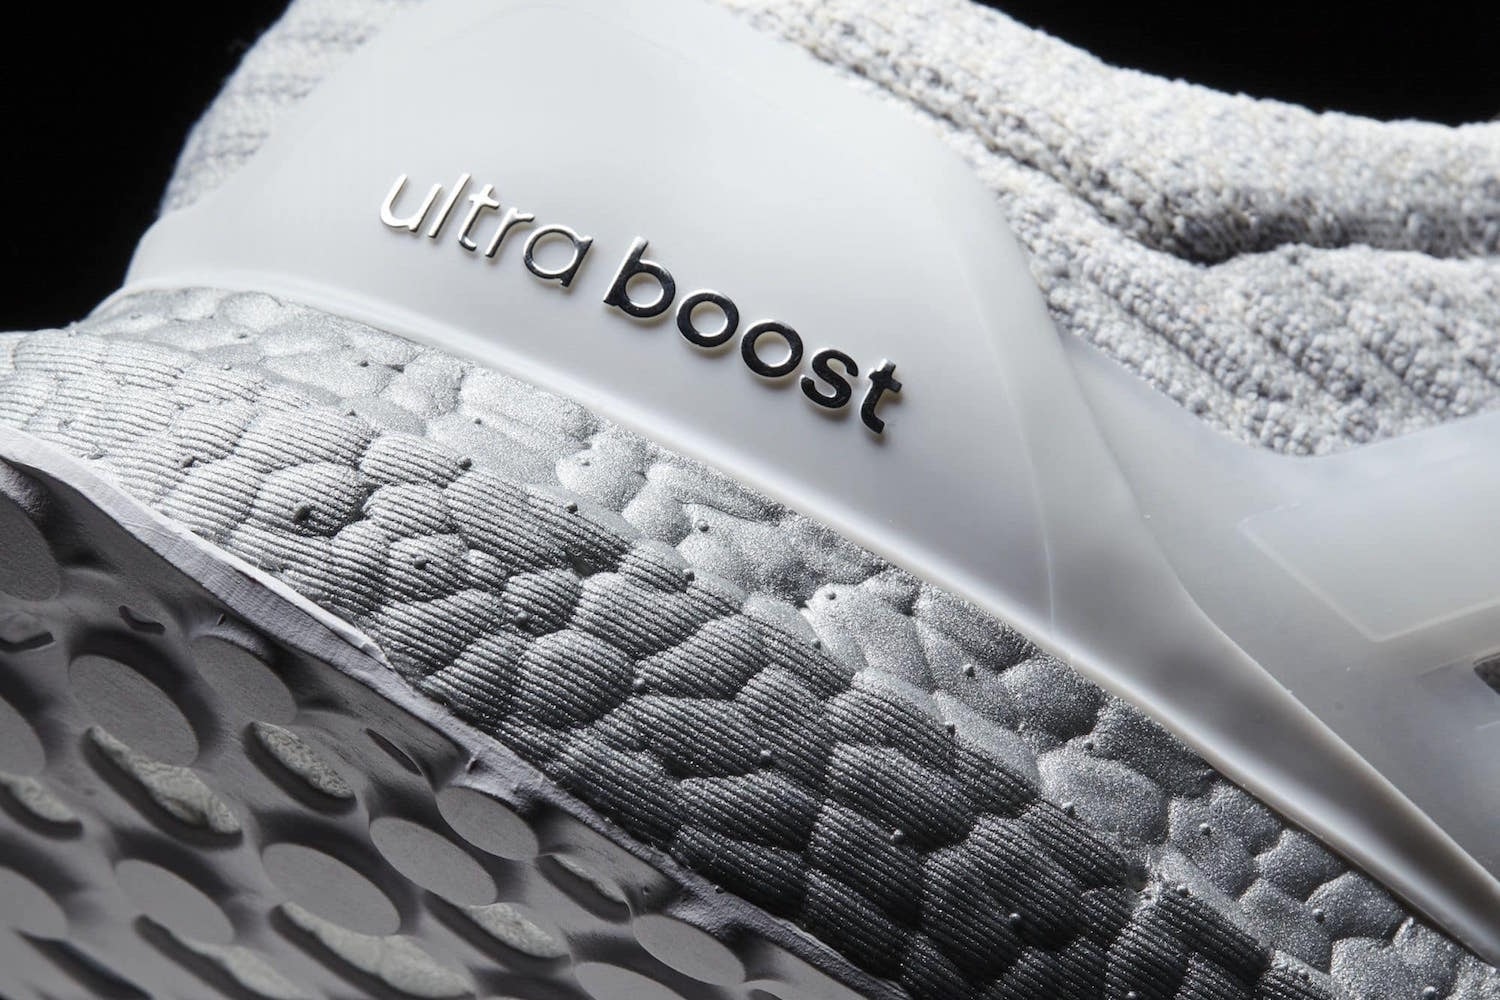 adidas UltraBOOST 3.0 "Crystal White"